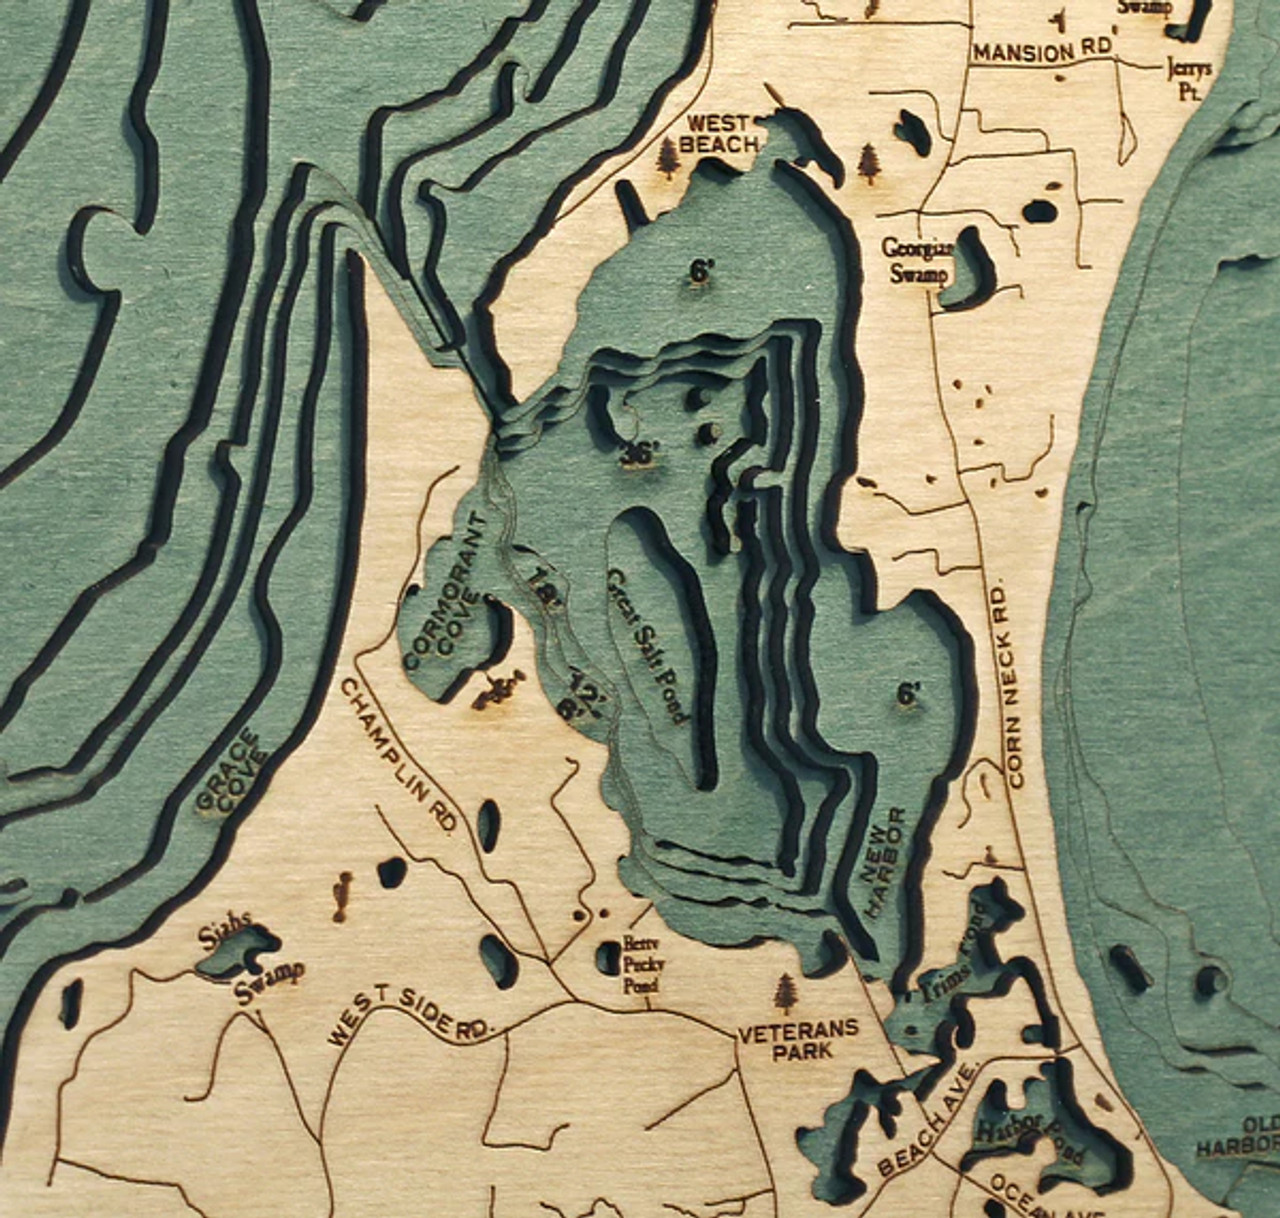 Block Island, Rhode Island - 3D Nautical Wood Chart